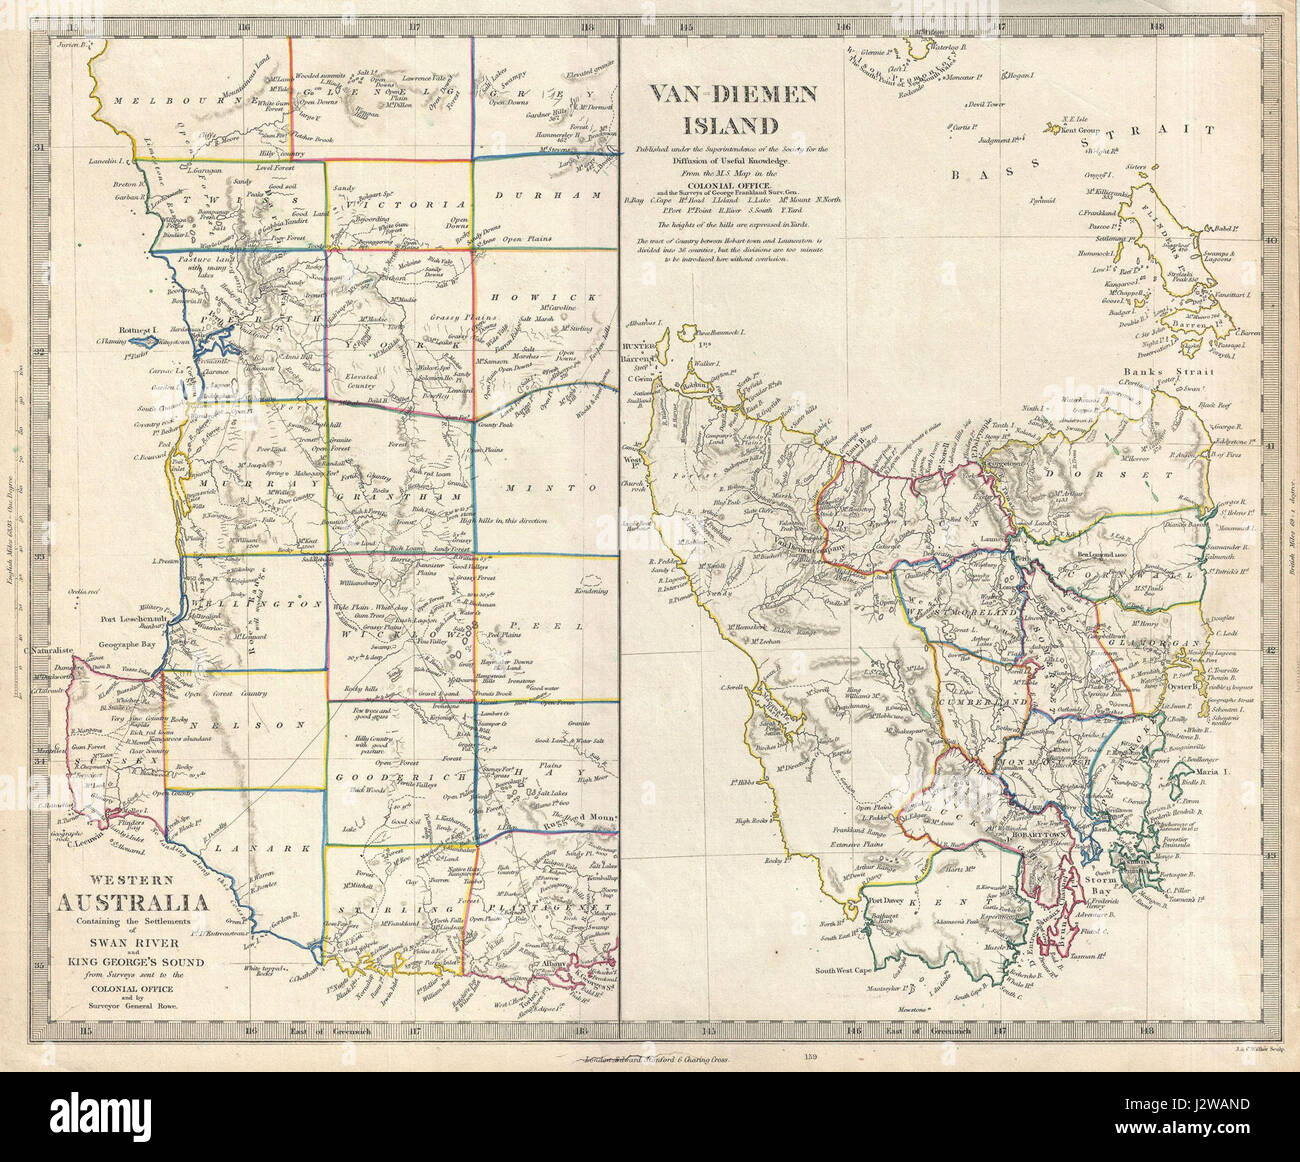 1849 S.D.U.K. Map of Tasmania or Van Diemen's Land and Western Australia - Geographicus - VanDiemen-sduk-1849 Stock Photo